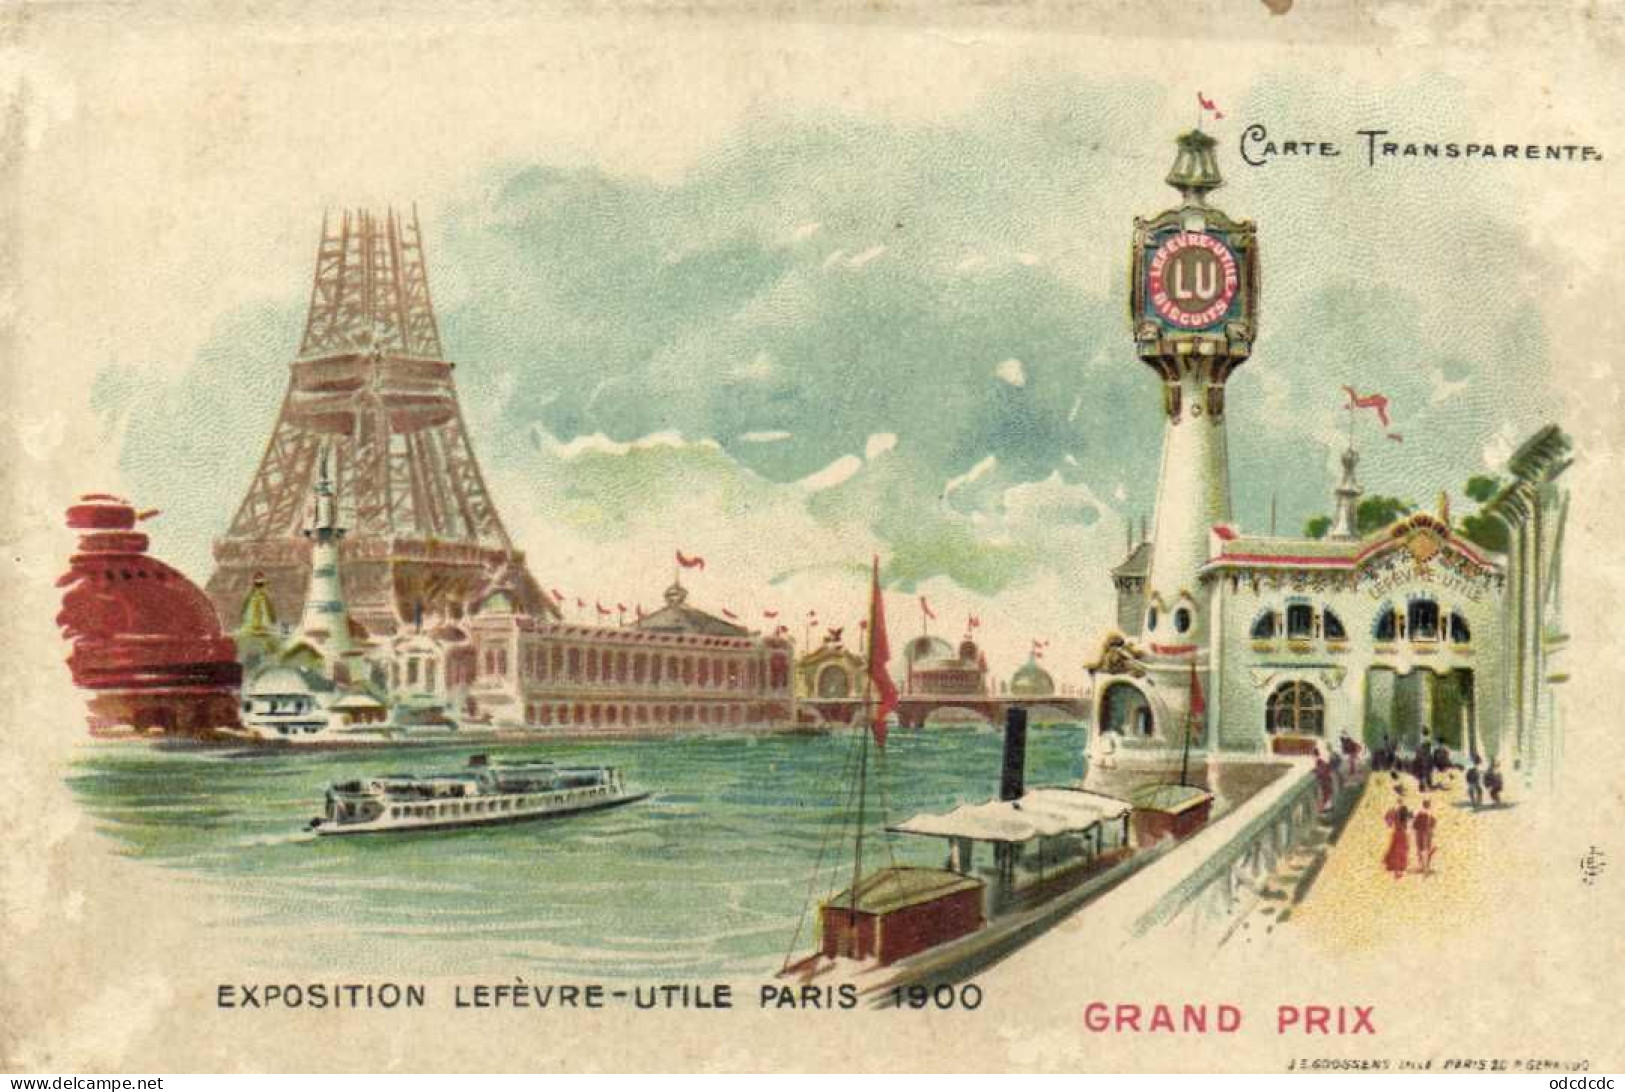 EXPOSITION LEFEVRE UTILE  PARIS 1900 GRAND PRIX  Carte Transparente Pionnière RV - Exposiciones